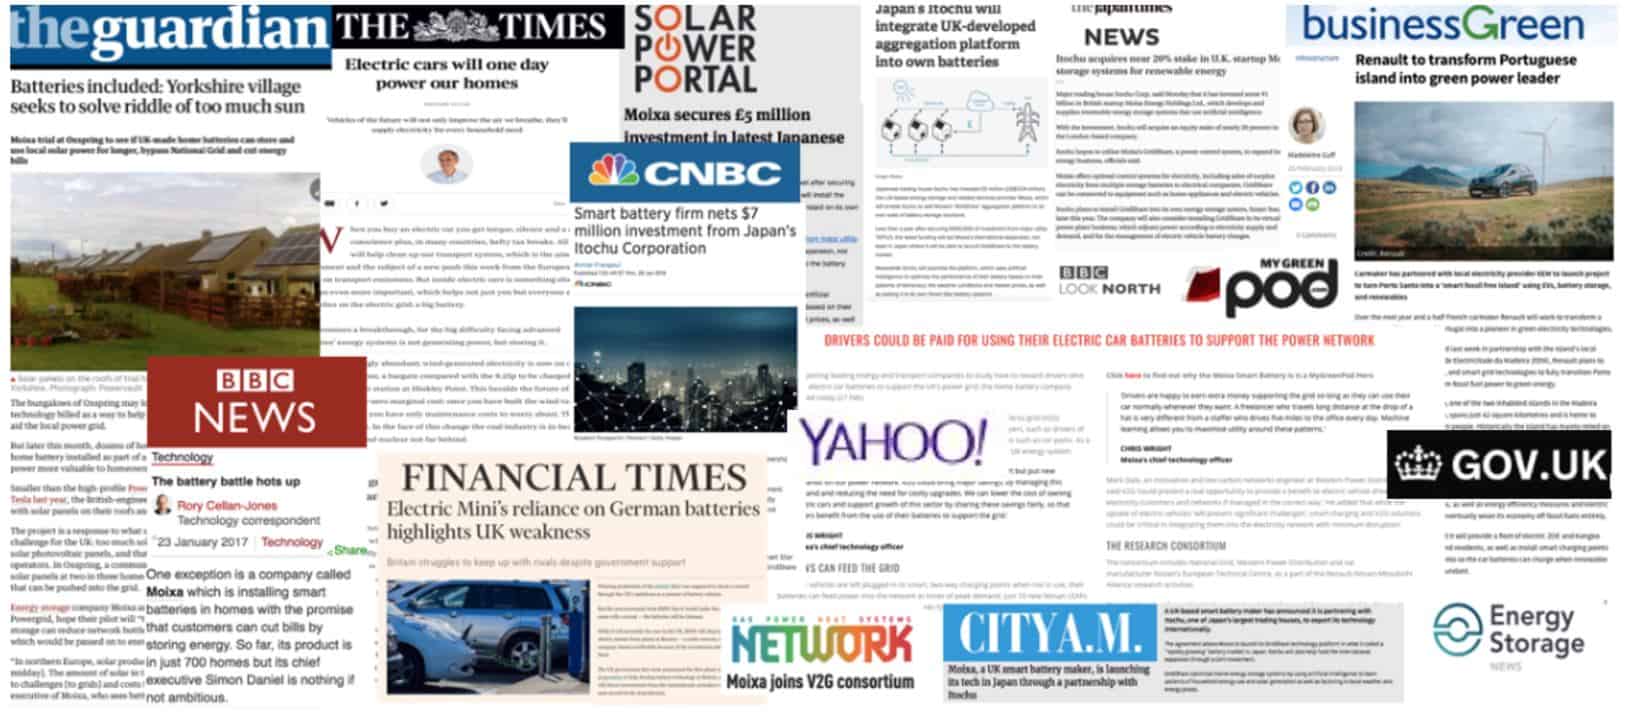 Collage of news headlines